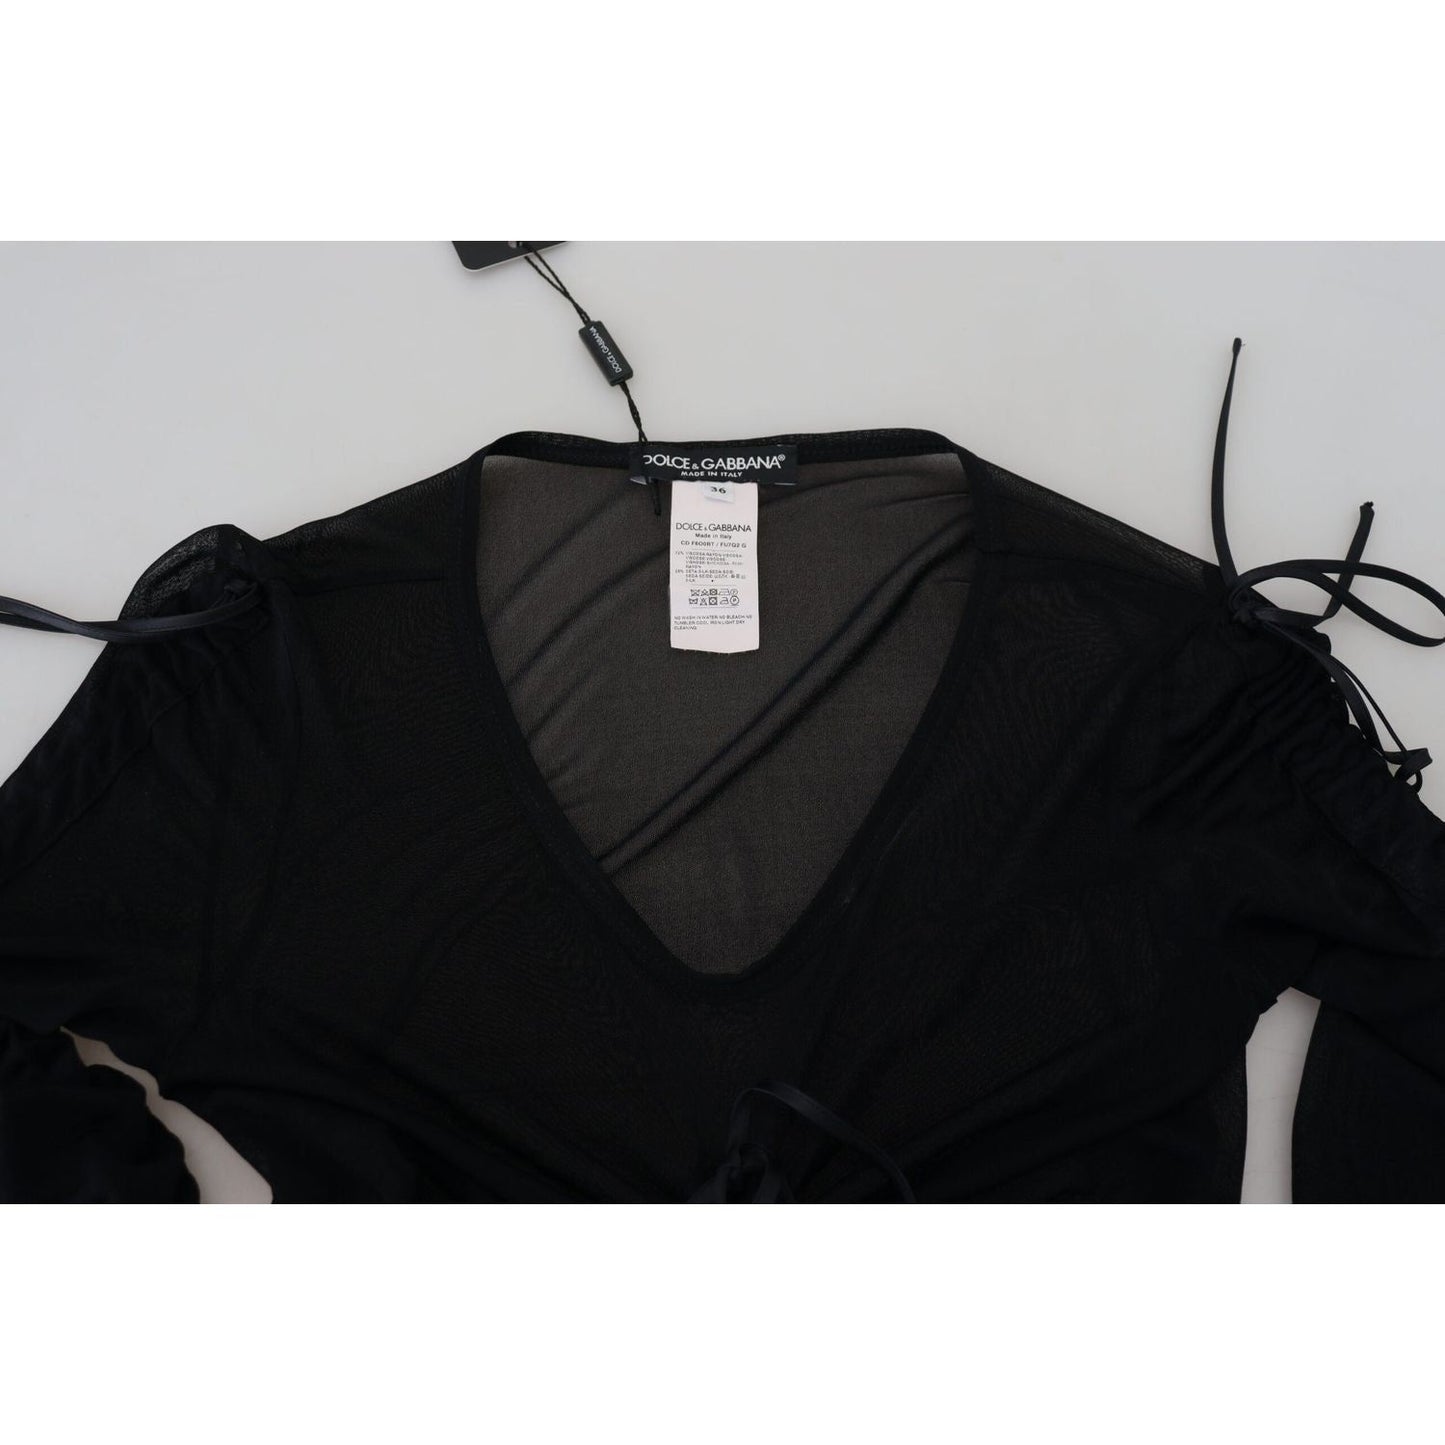 Dolce & GabbanaElegant Black Silk Blend Bodycon DressMcRichard Designer Brands£1059.00